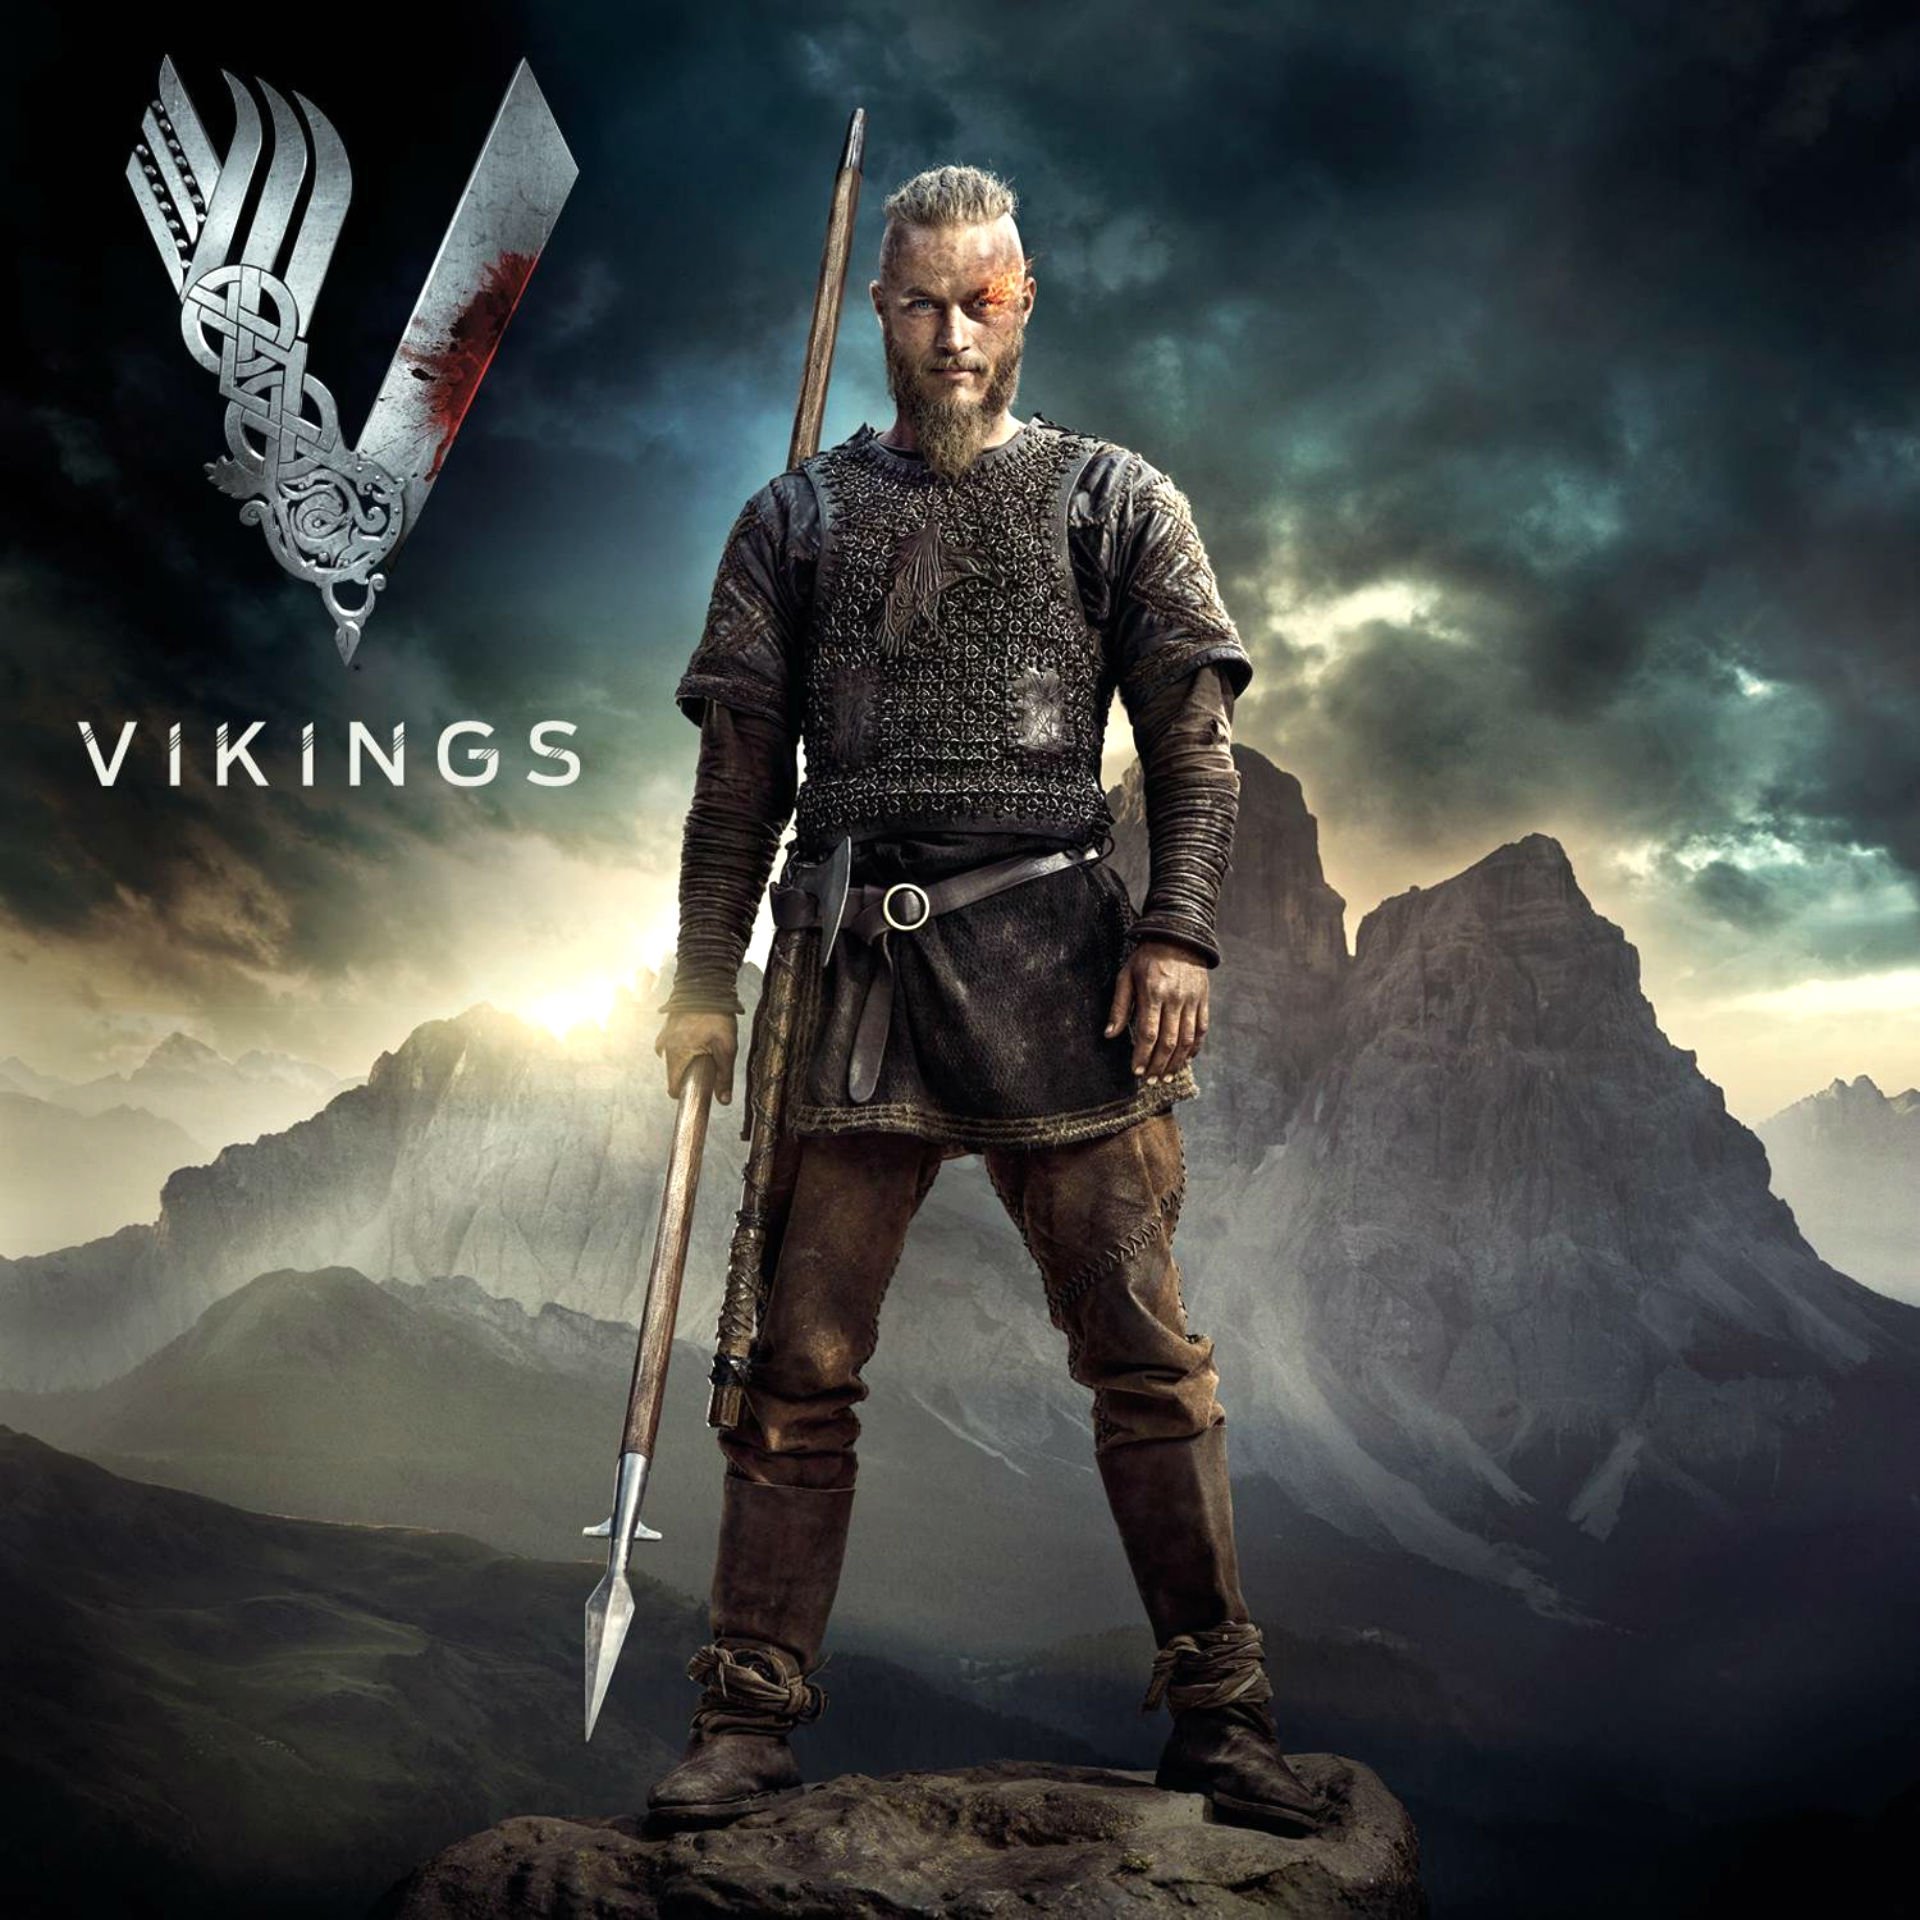 Alf Img Showing Vikings History Background